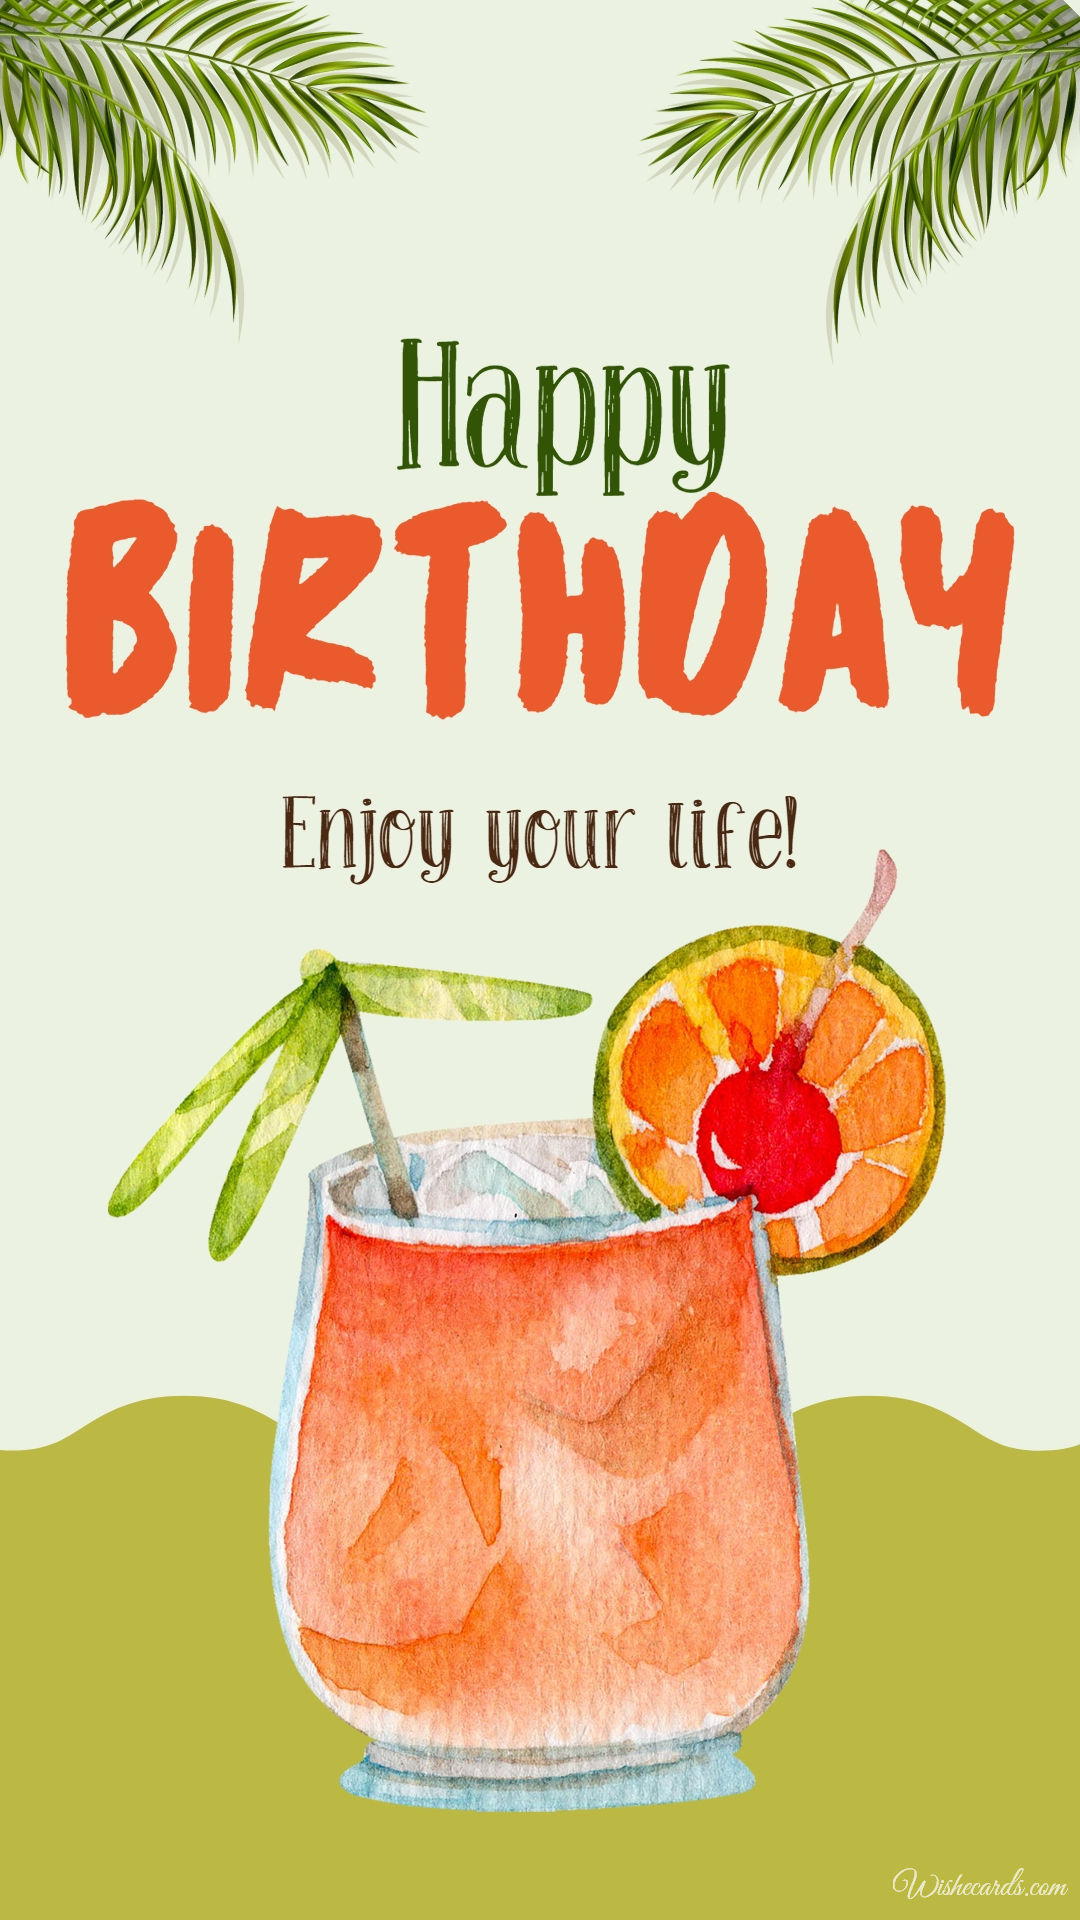 Happy Birthday Cocktail Image